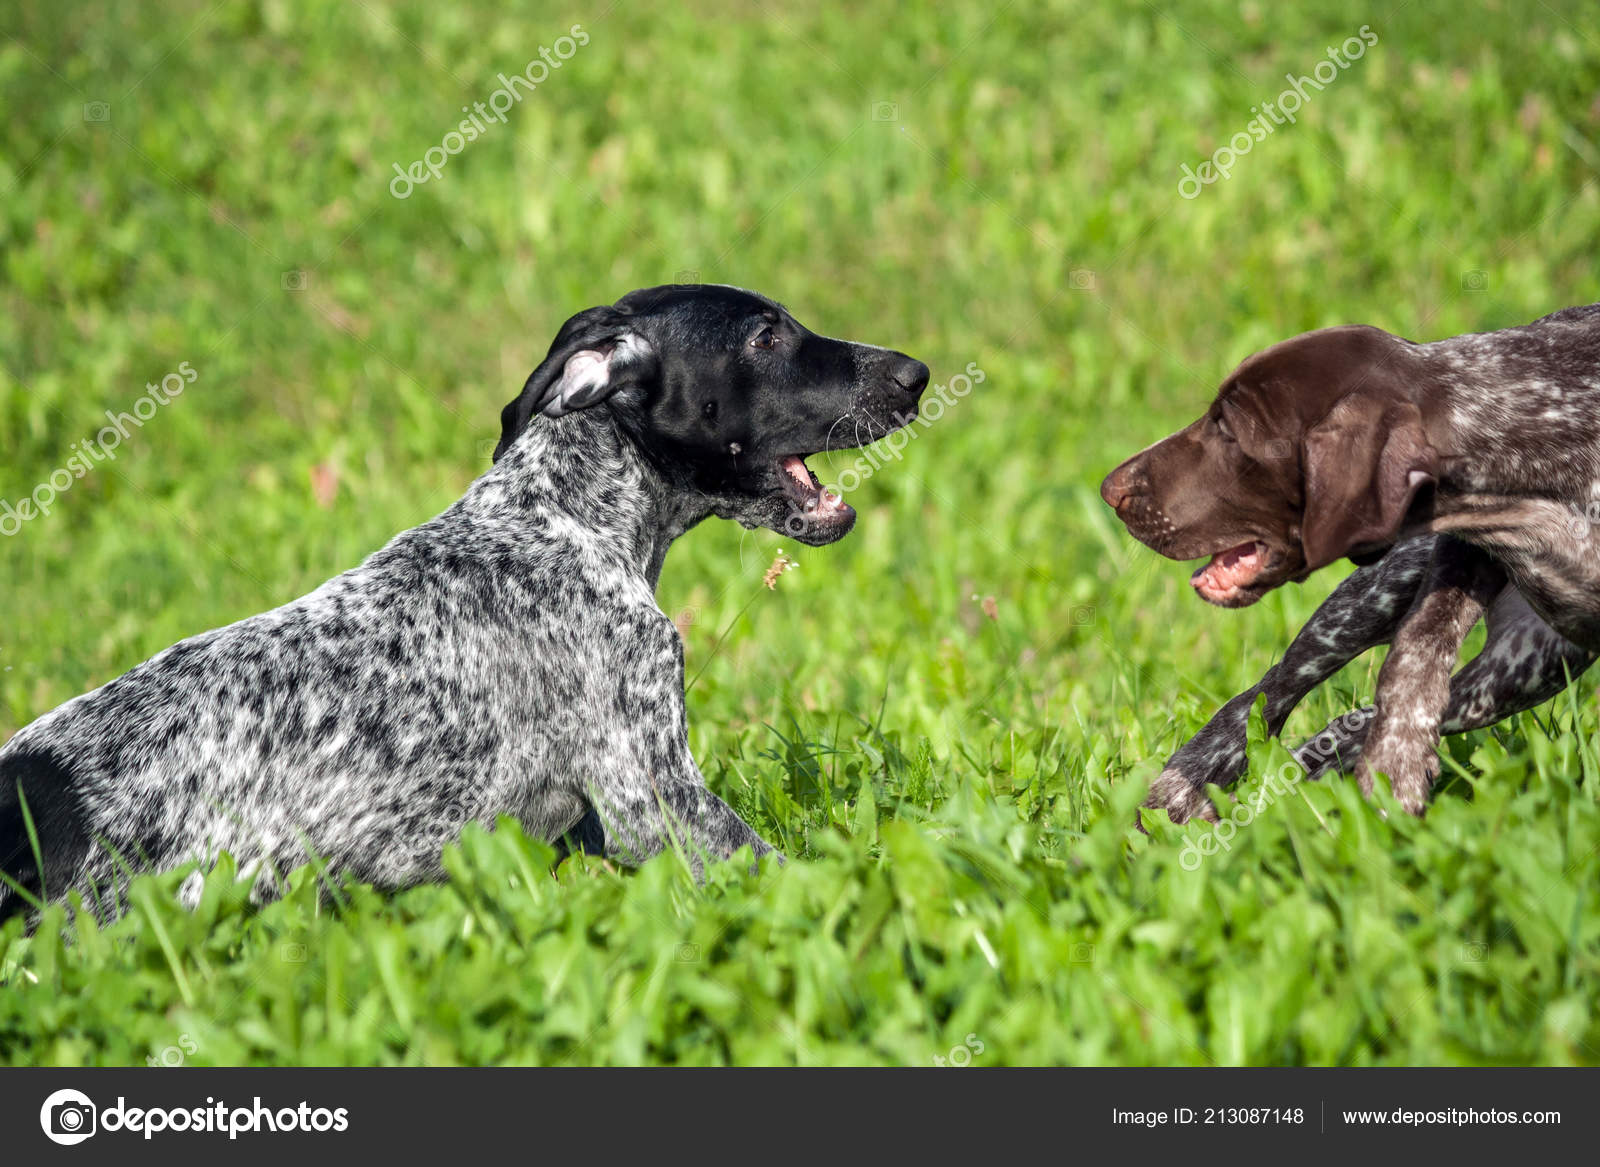 German Shorthaired Pointer Kurtshaar Two Spotted Little Puppy Black Brown Stock Photo C Evaheaven2018 213087148